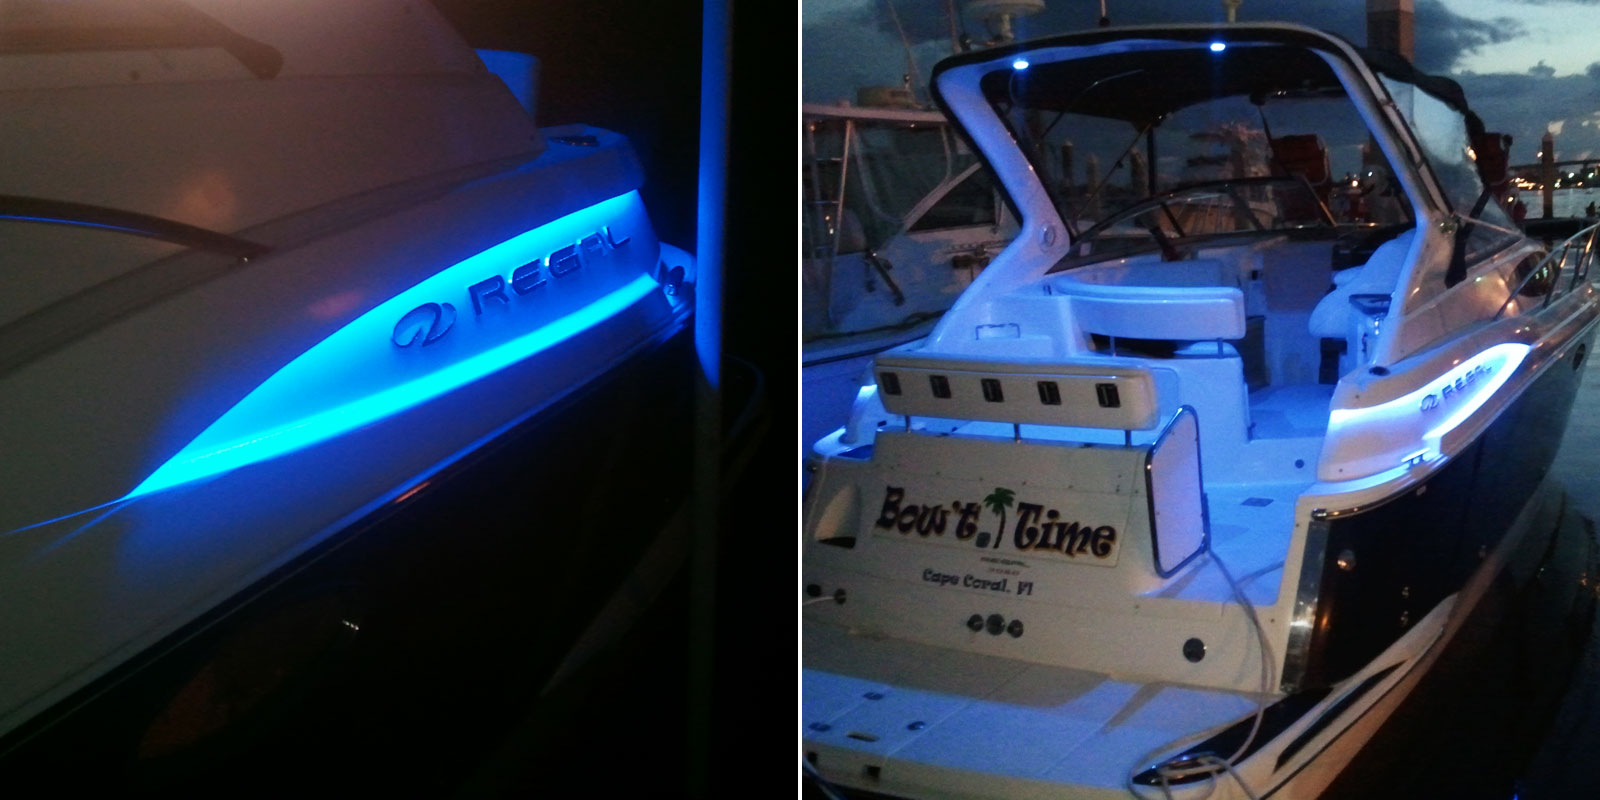 Outdoor RGB LED Strip Lights - Waterproof 12V LED Tape Light - 97 Lumens/ft.